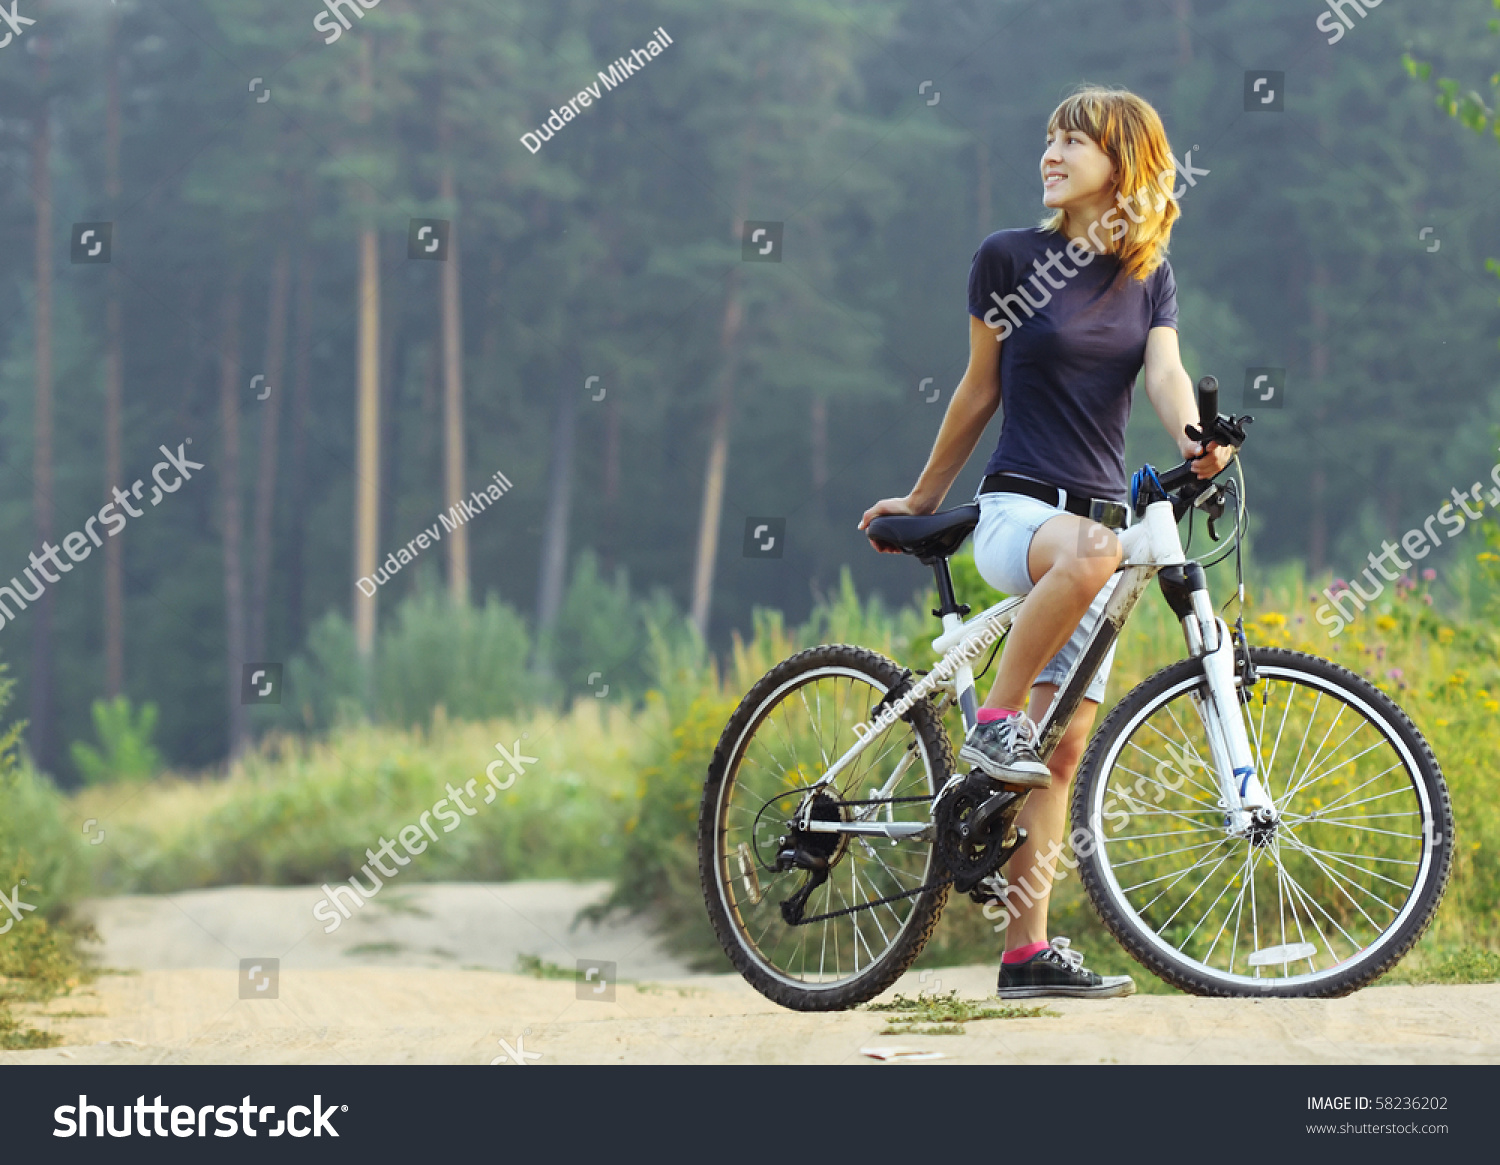 standing on bike